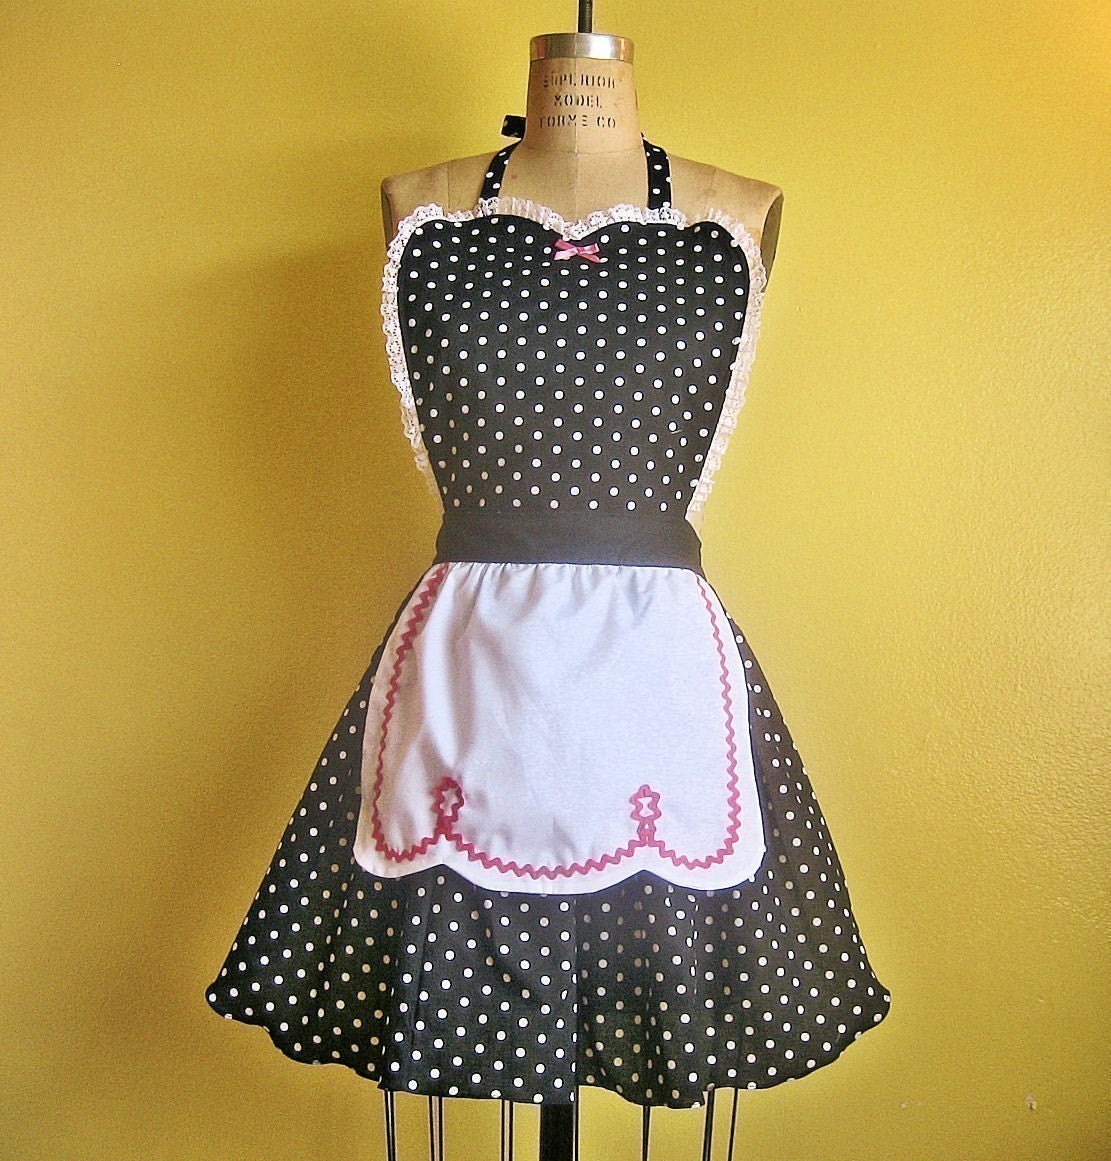 Retro APRON I Love Lucy black polka dot sexy hostess apron vintage inspired